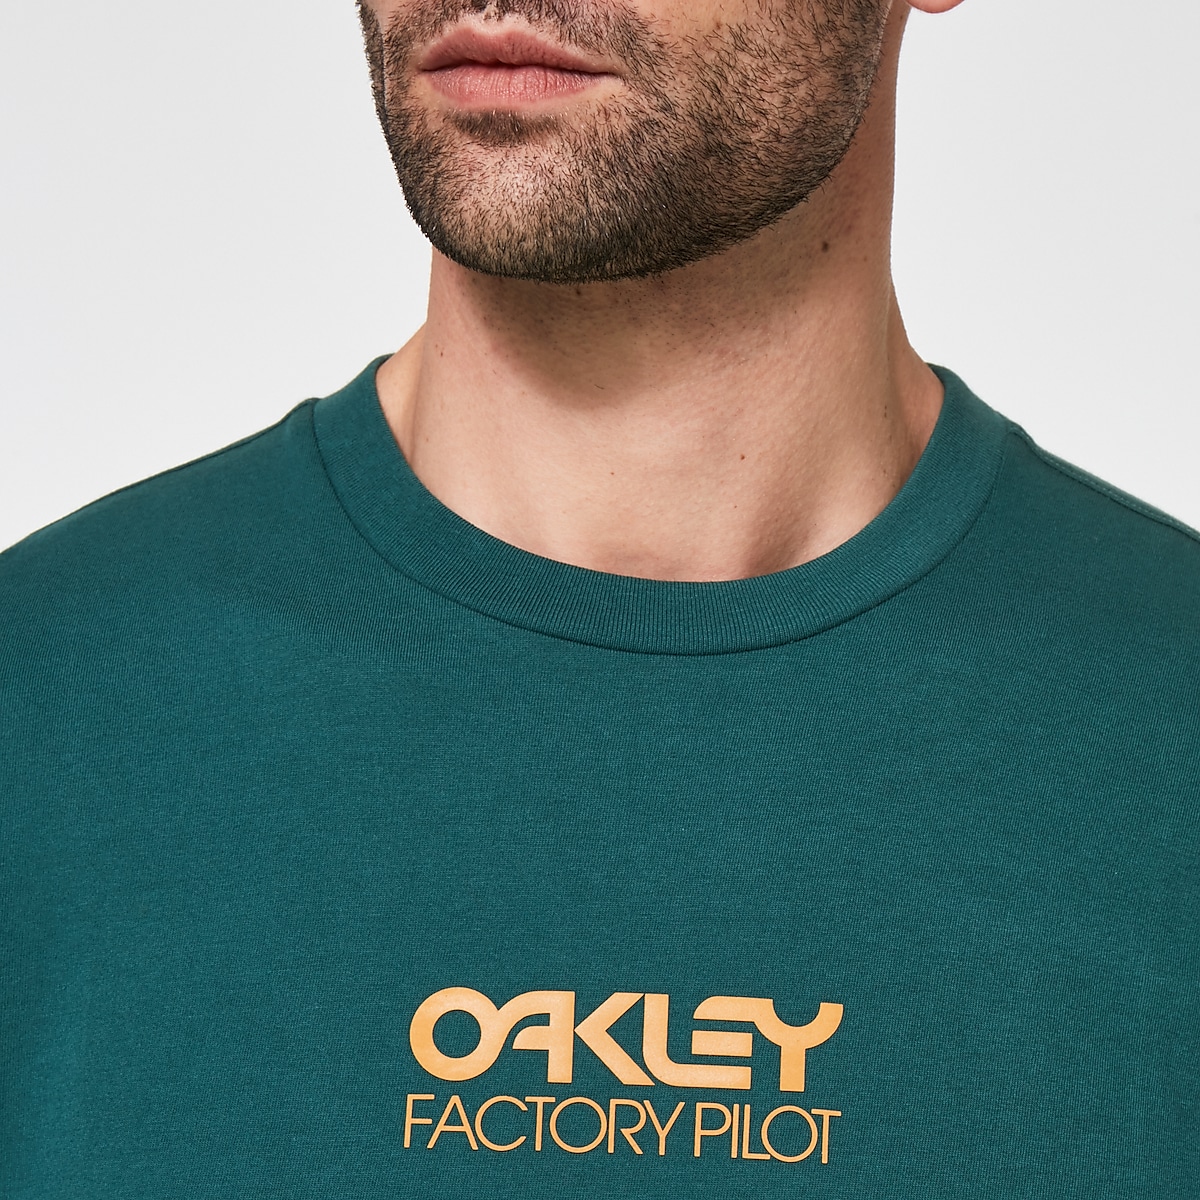 Oakley Everyday Factory Pilot Tee - White | Oakley GB Store